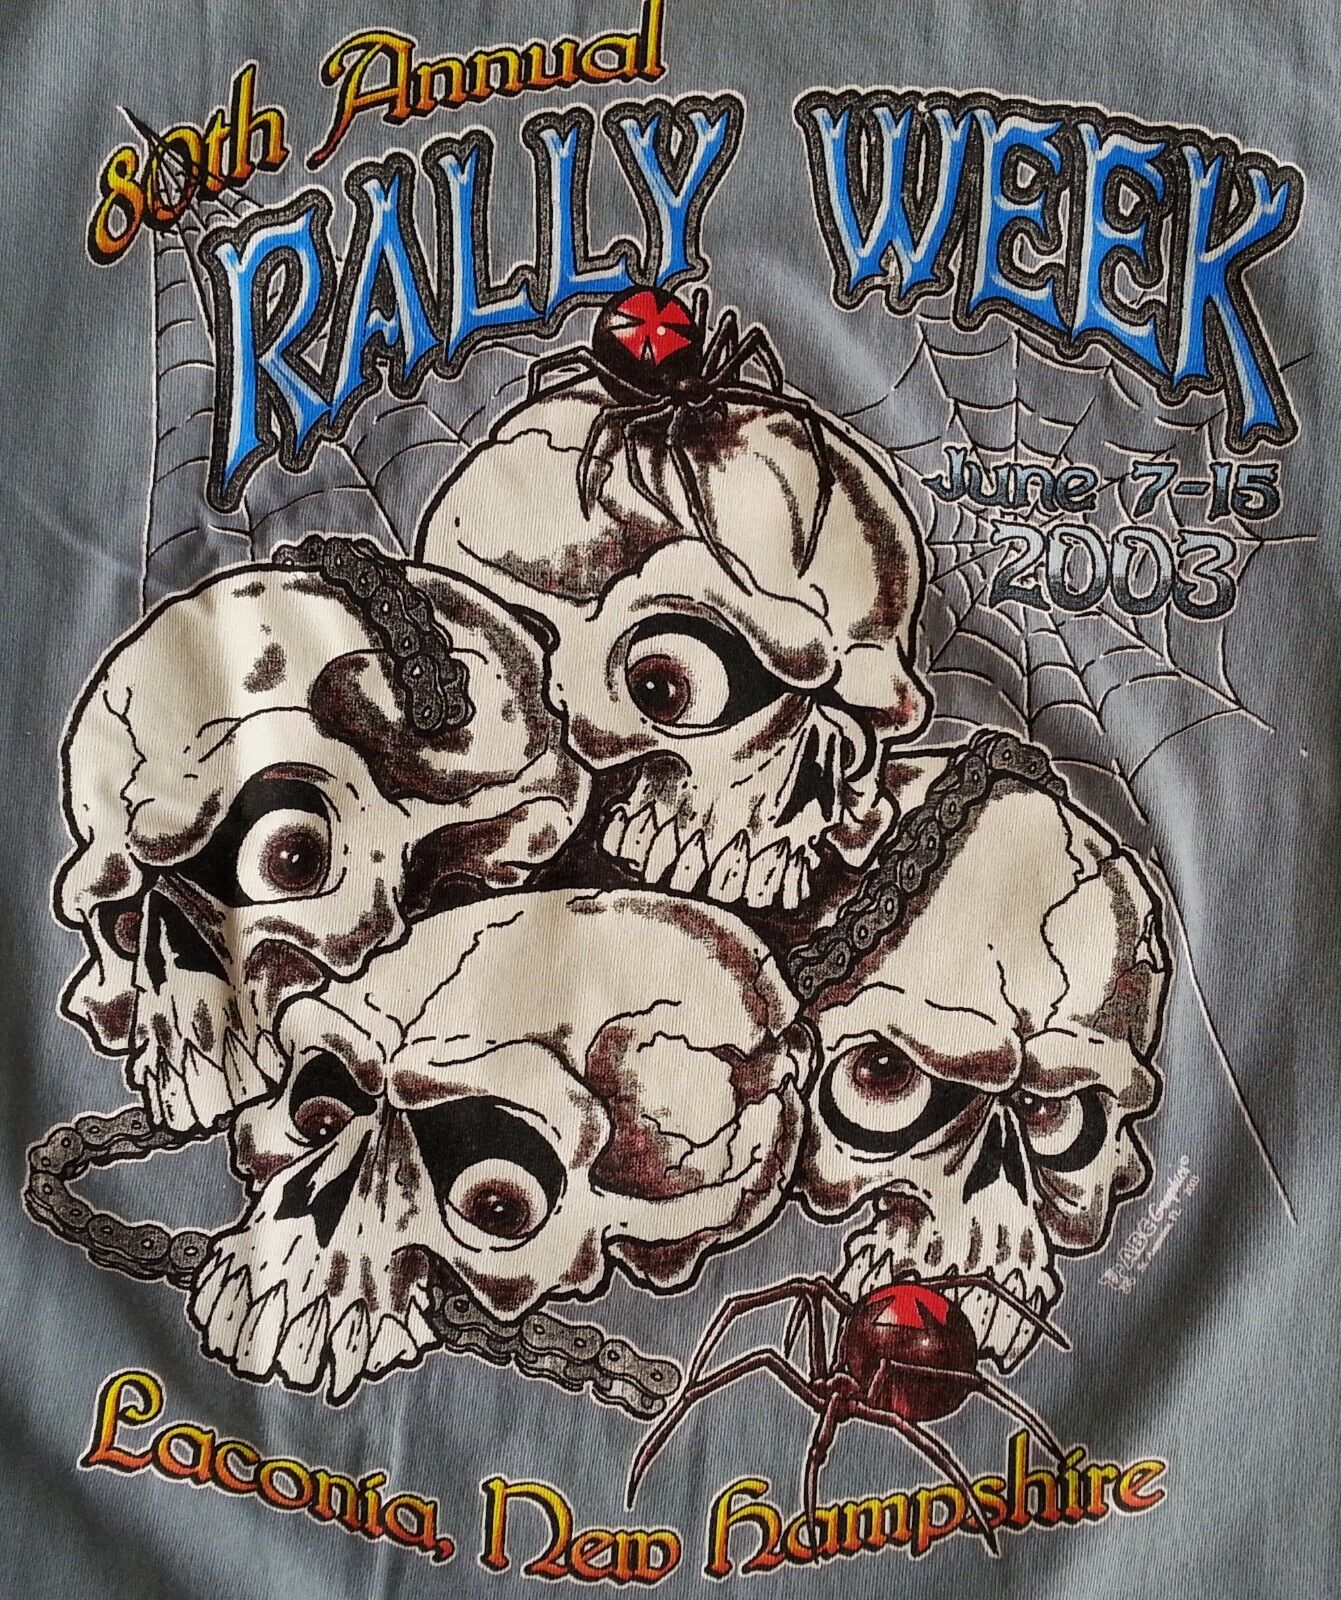 Skulls Biker Tee Shirt Laconia Bike Rally Week 2003 Lrg Motorcycle New Hampshire